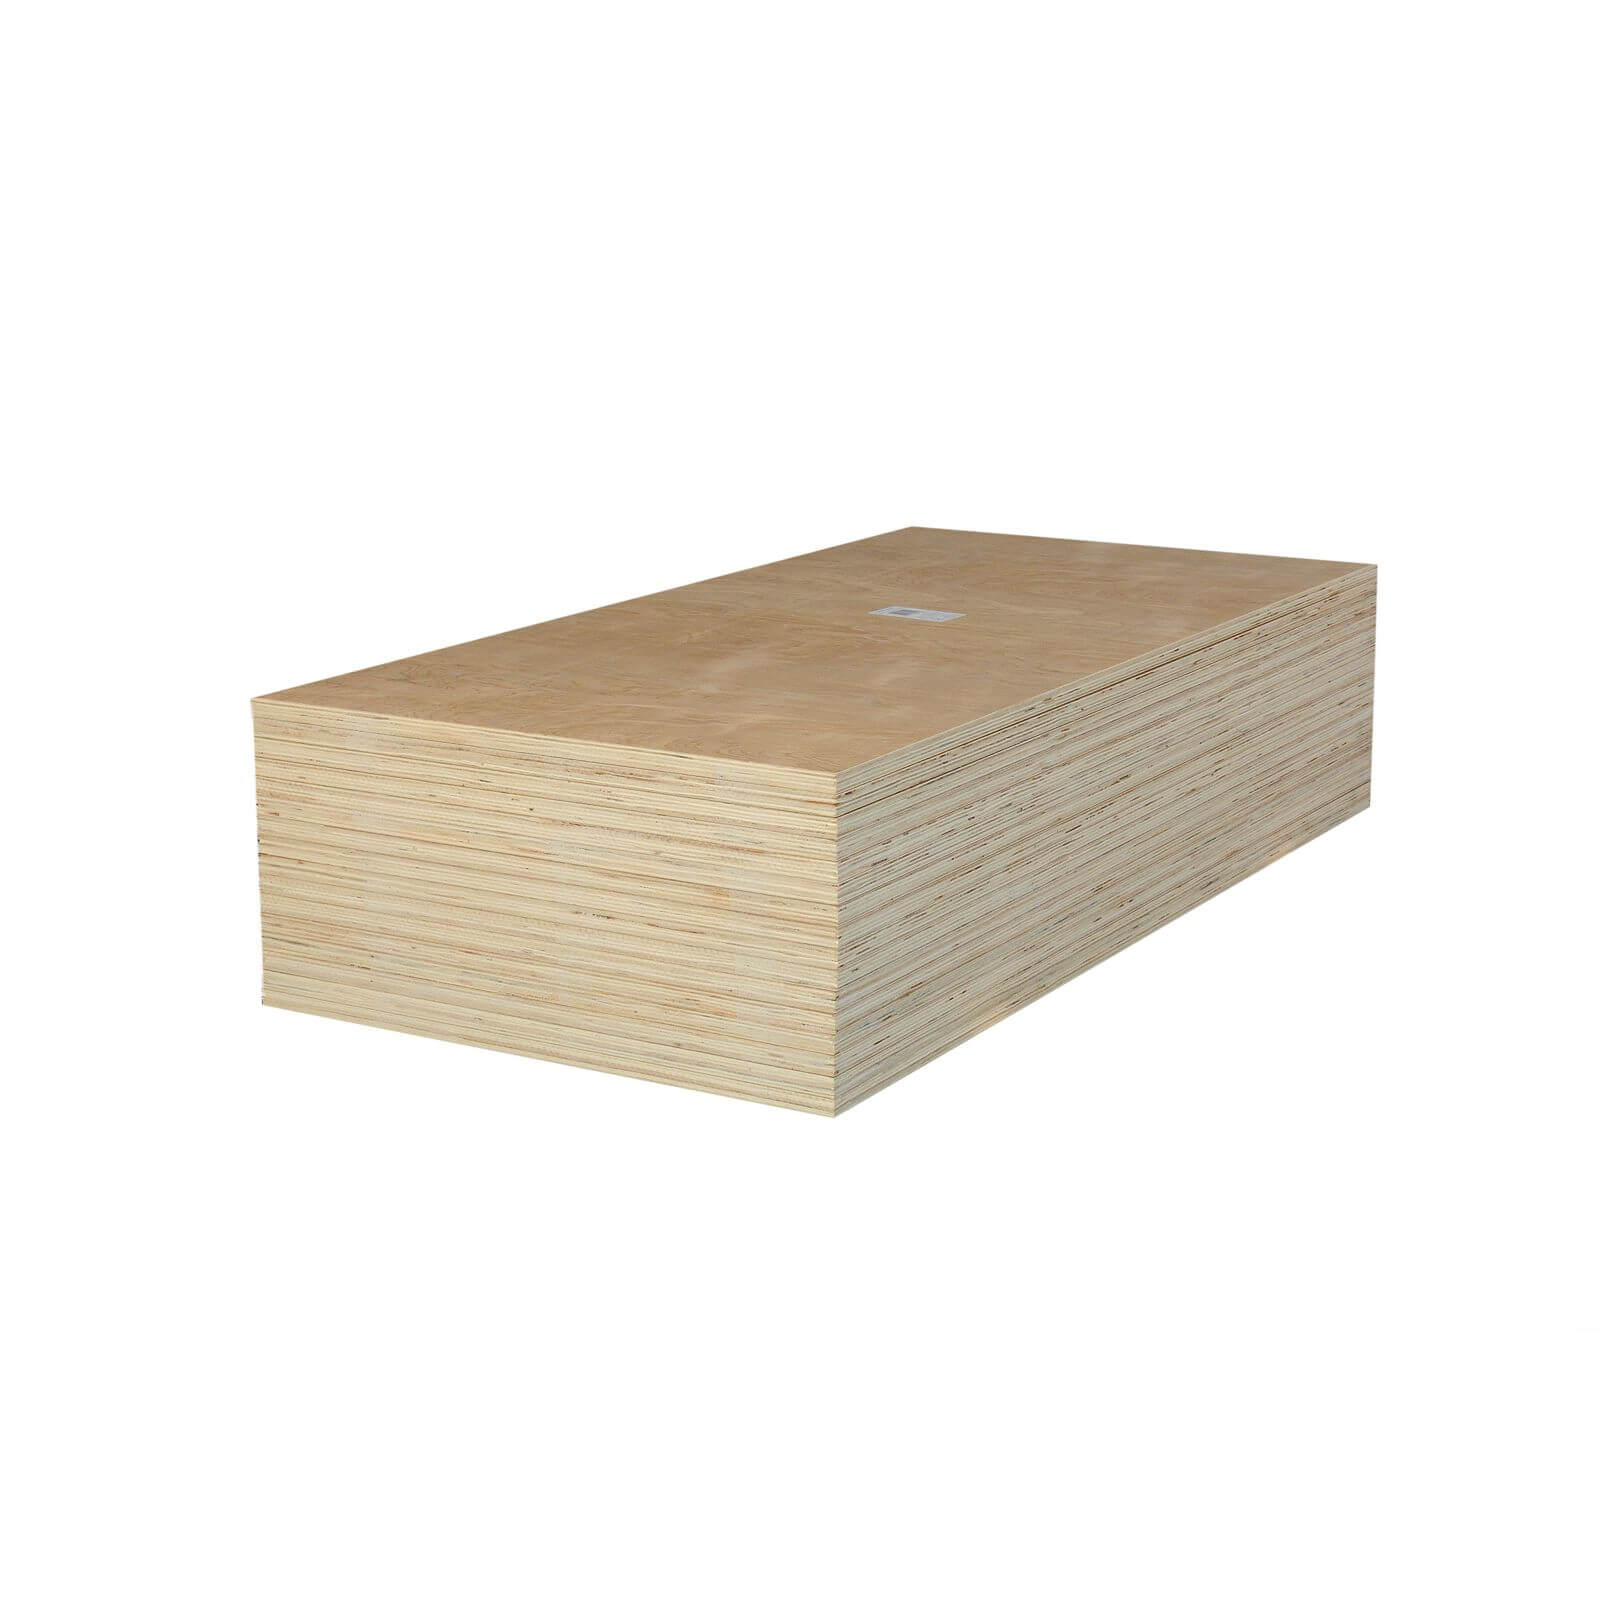 Metsa Hardwood Plywood Board 1.2m (1220 x 607 x 18mm)